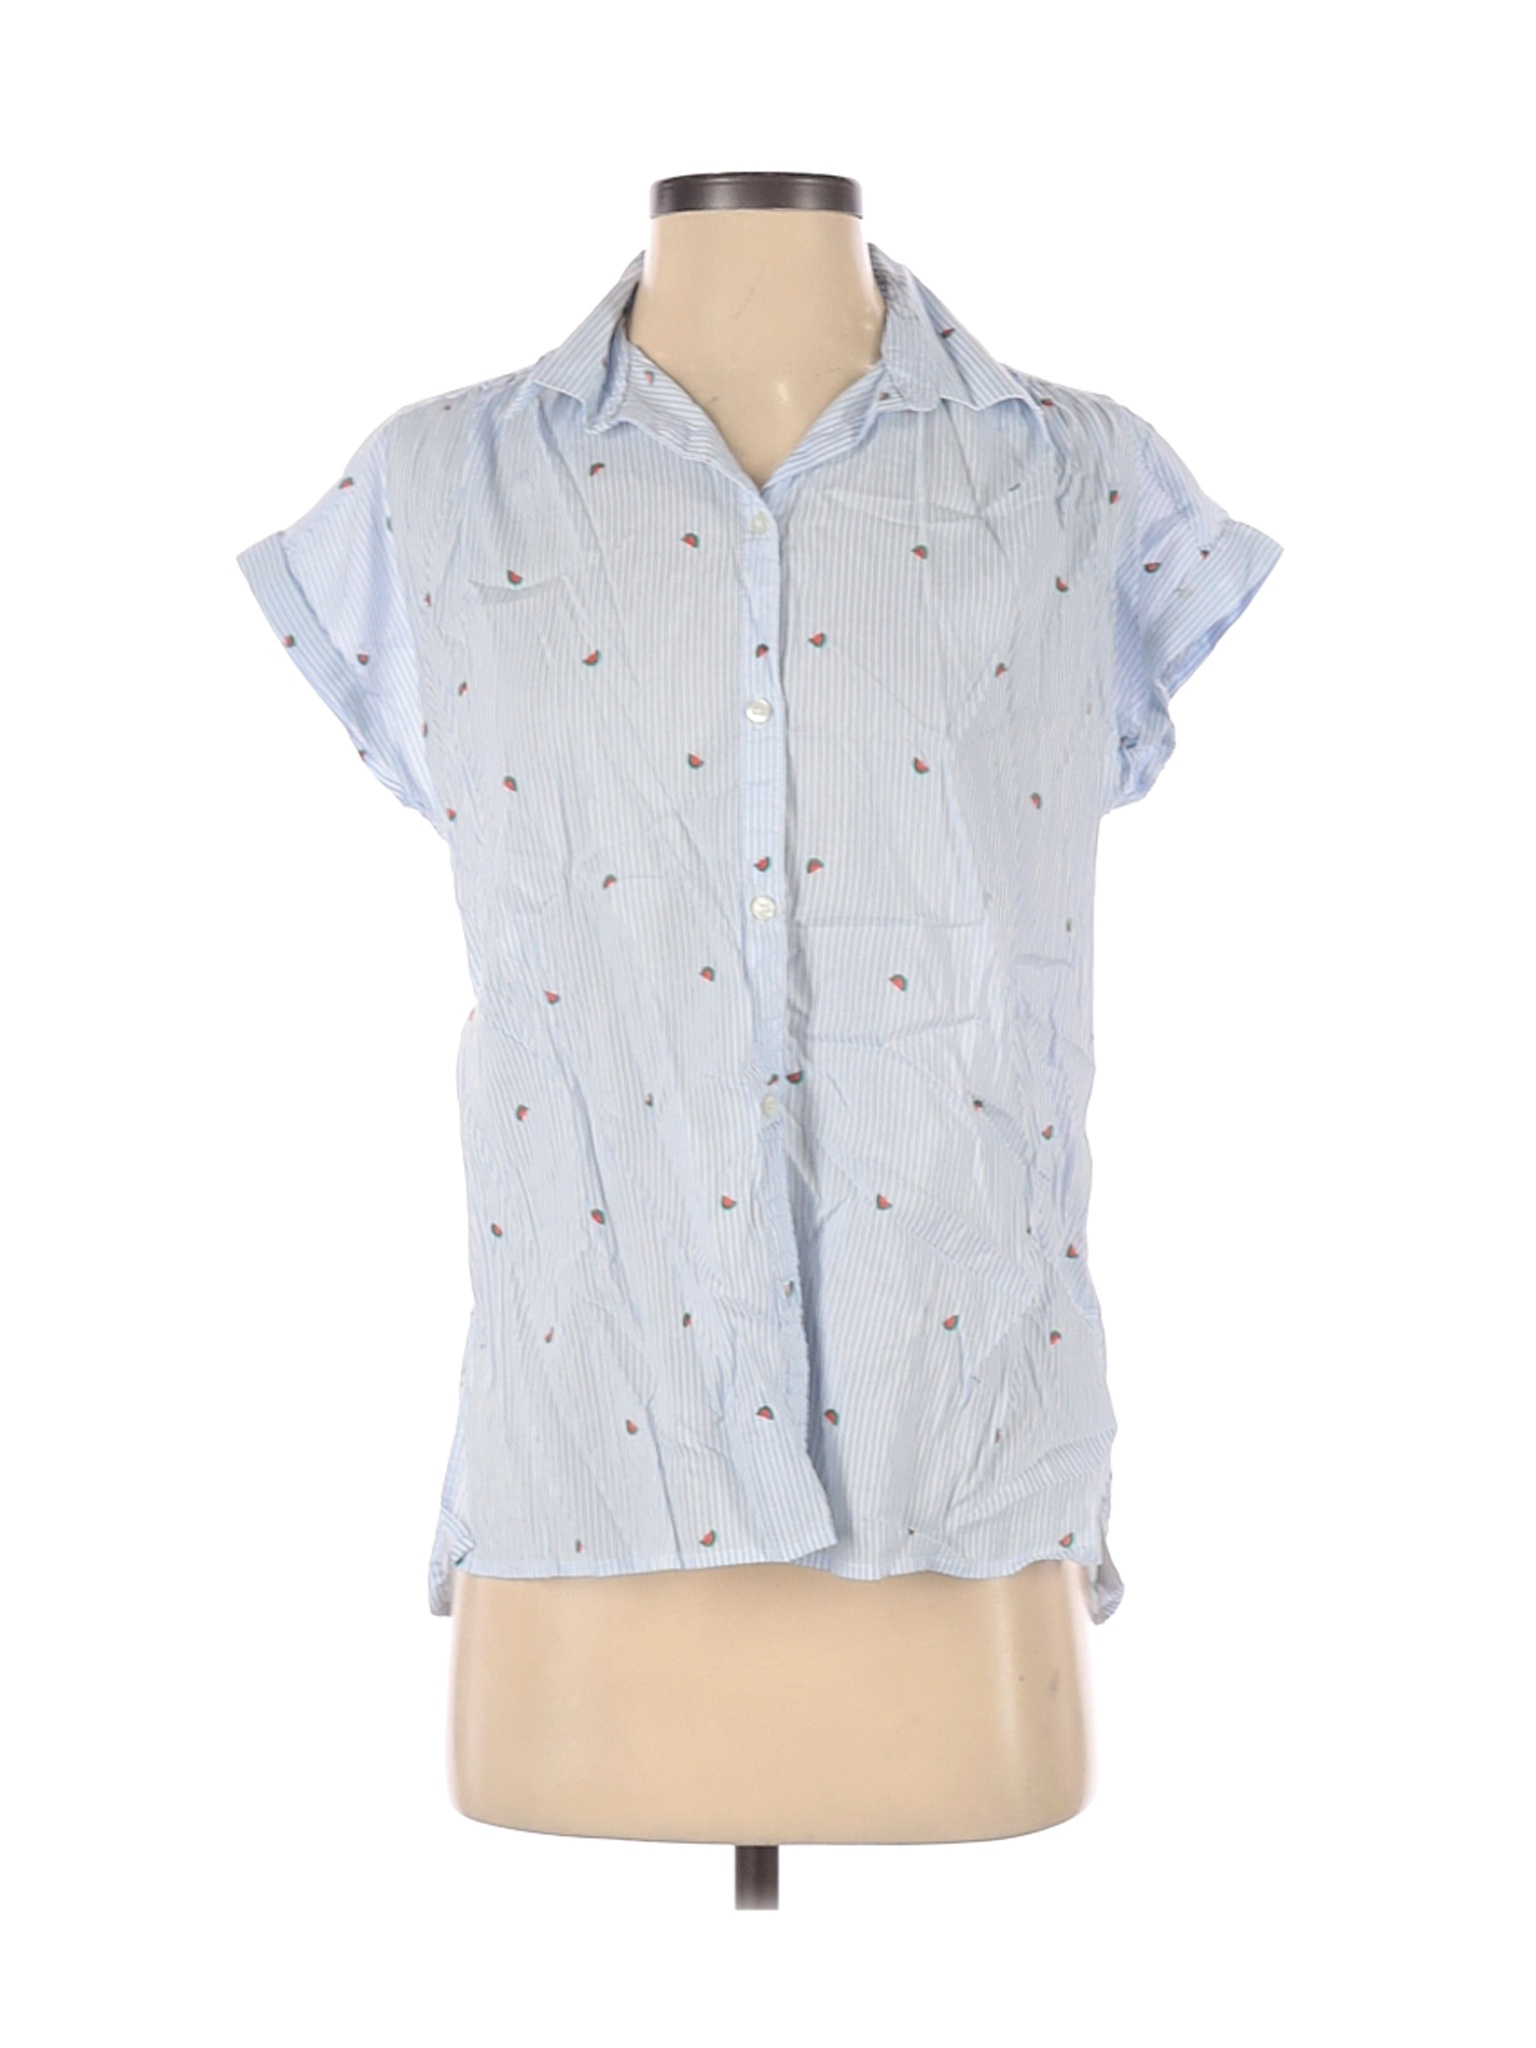 Old Navy Women White Short Sleeve Button-Down Shirt S | eBay